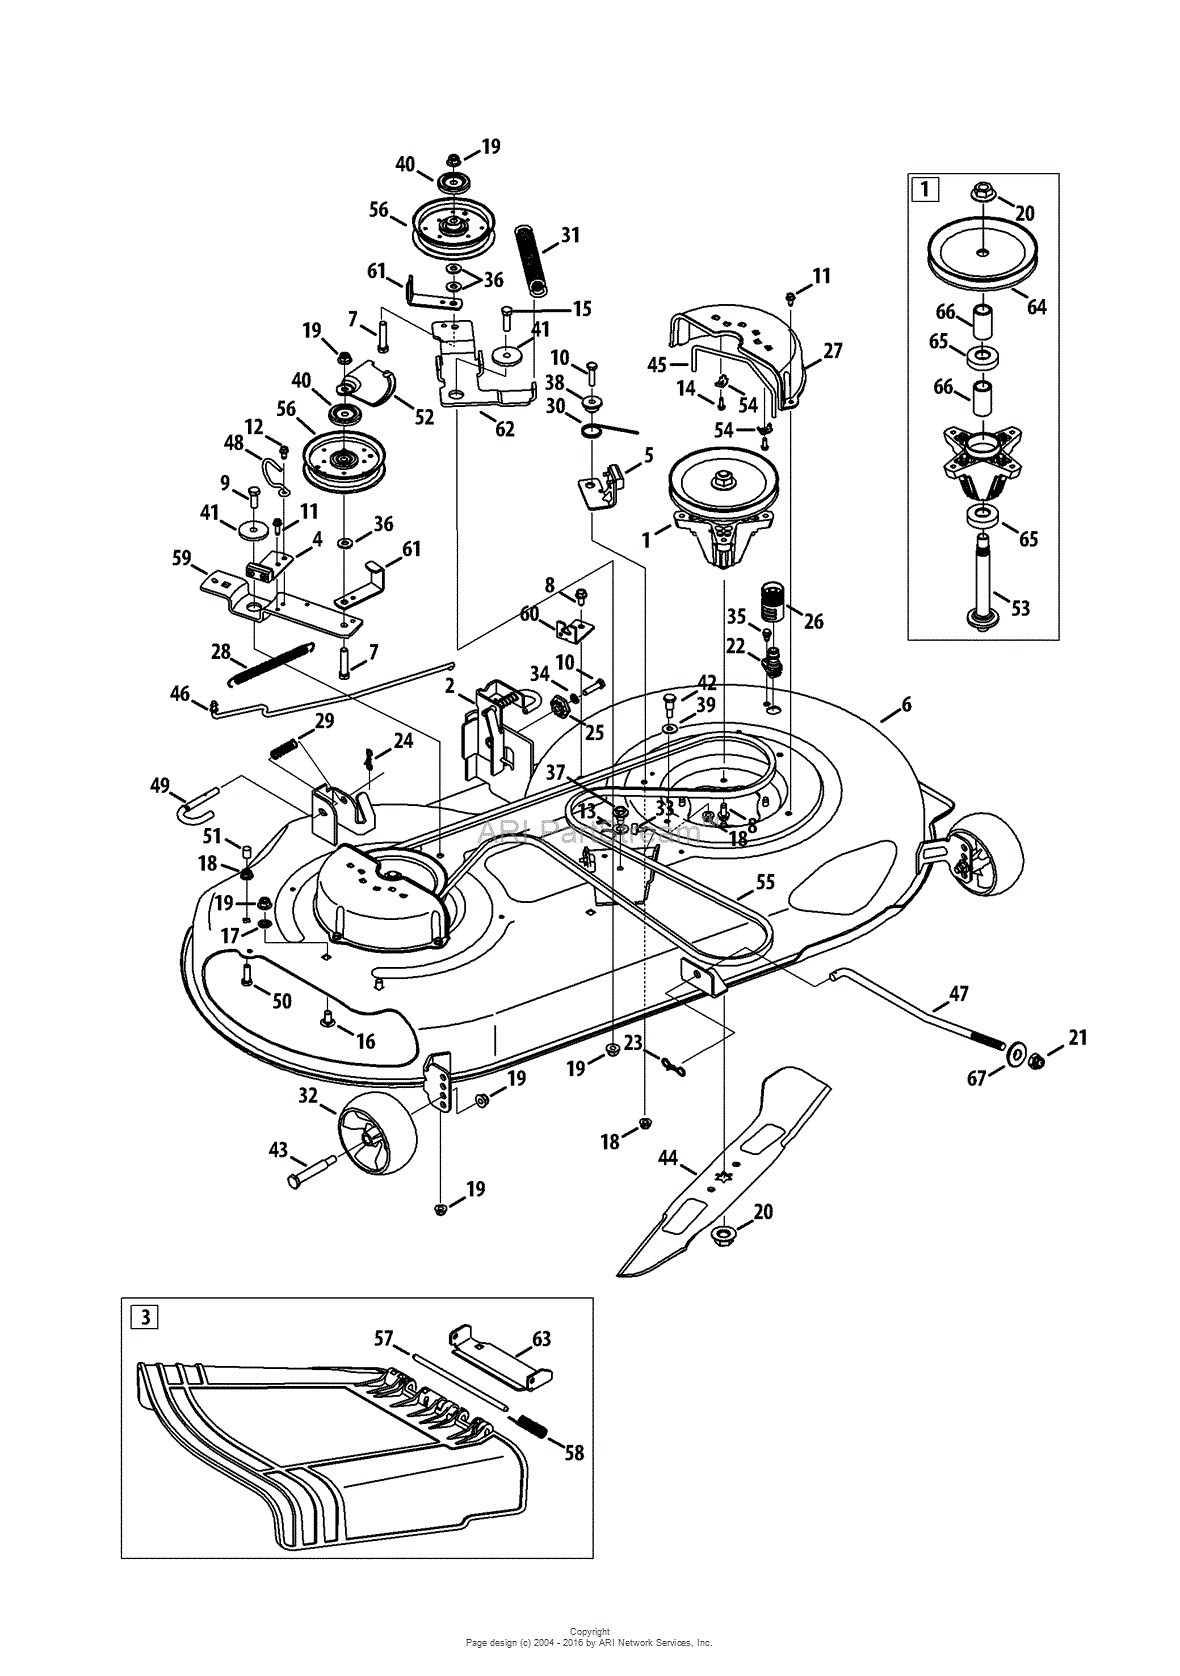 Craftsman Riding Mower Parts Diagram Mtd 13bl78st099 247 Lt2000 2013 Parts Diagrams Of Craftsman Riding Mower Parts Diagram